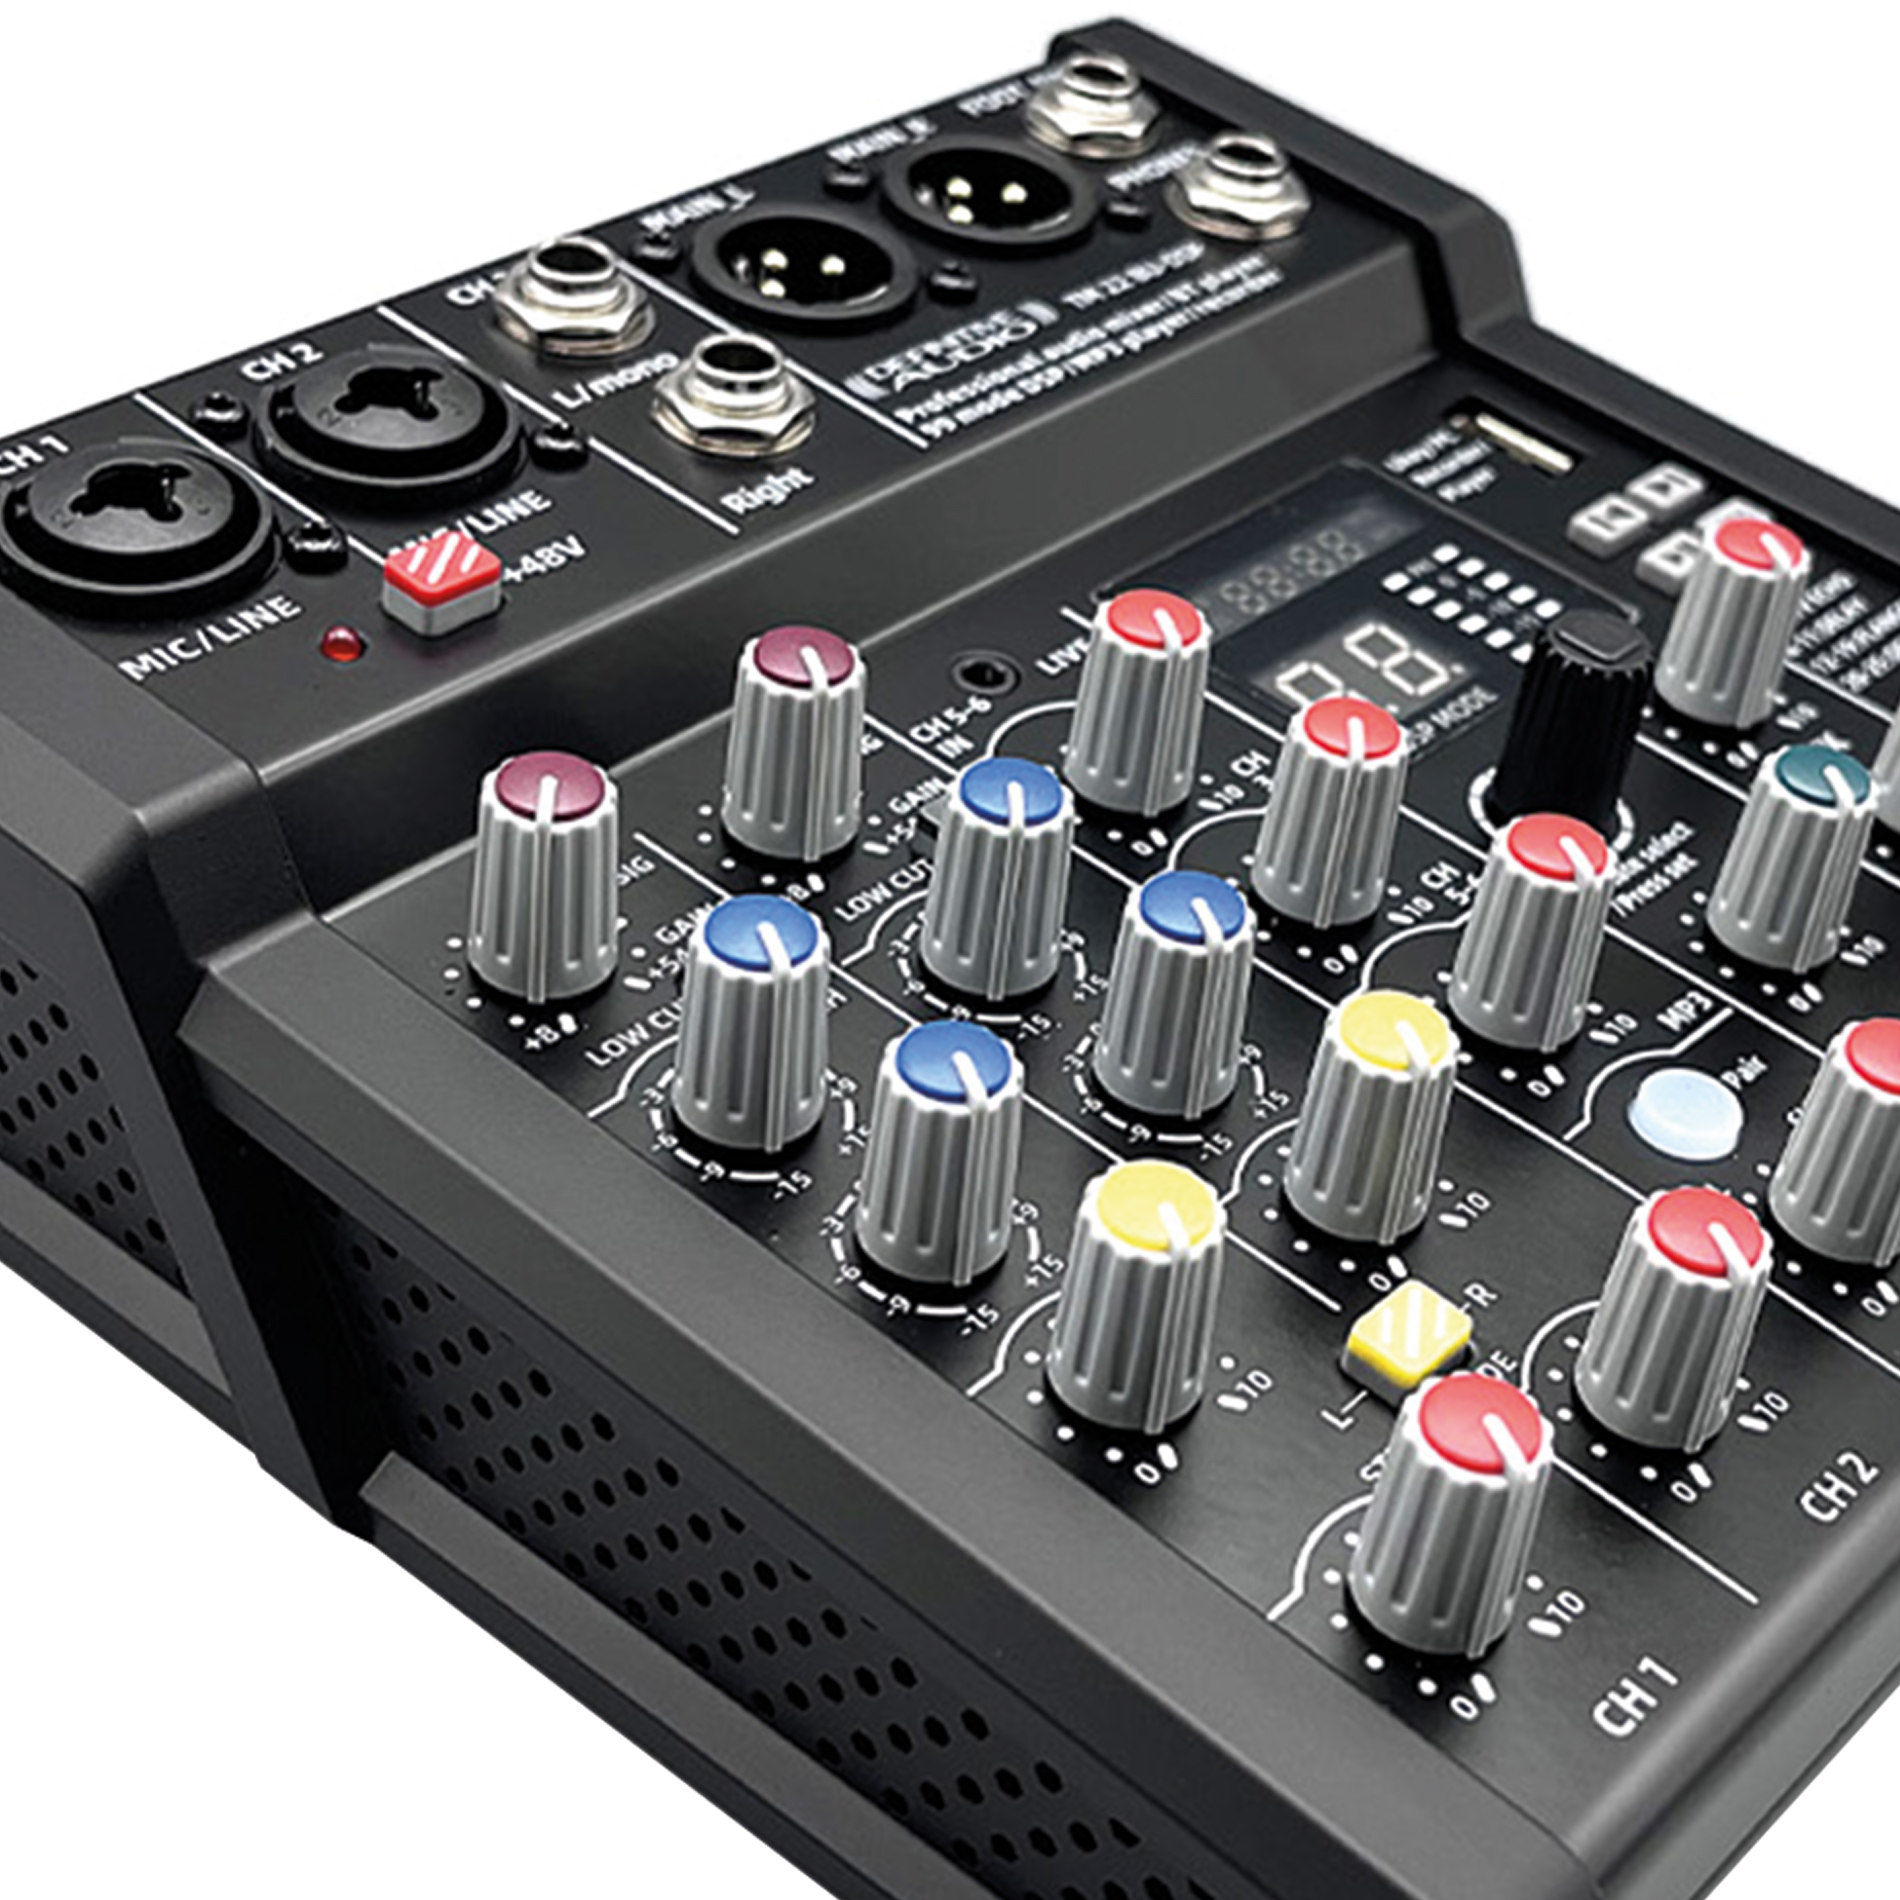 Definitive Audio Tm 22 Bu-dsp - Analog mixing desk - Variation 6